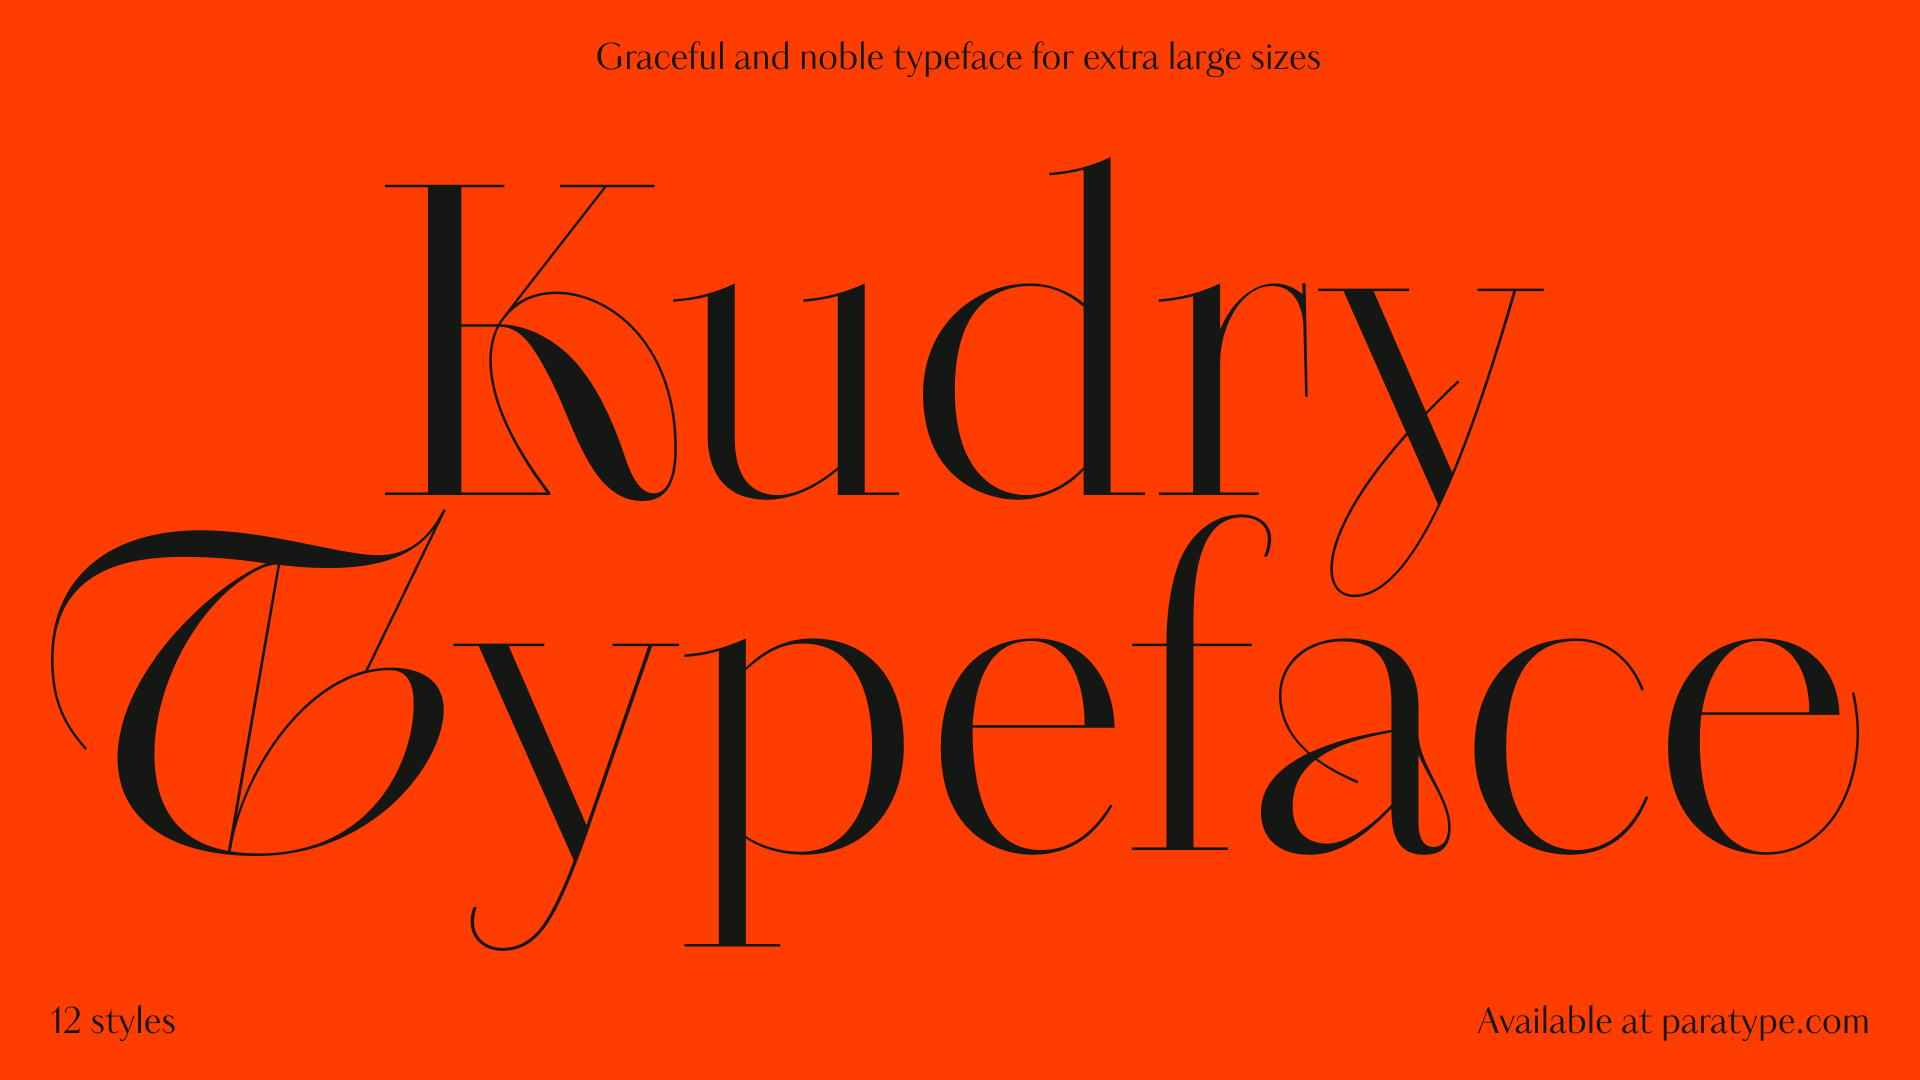 Kudry Typeface — Изображение №2 — Графика на Dprofile